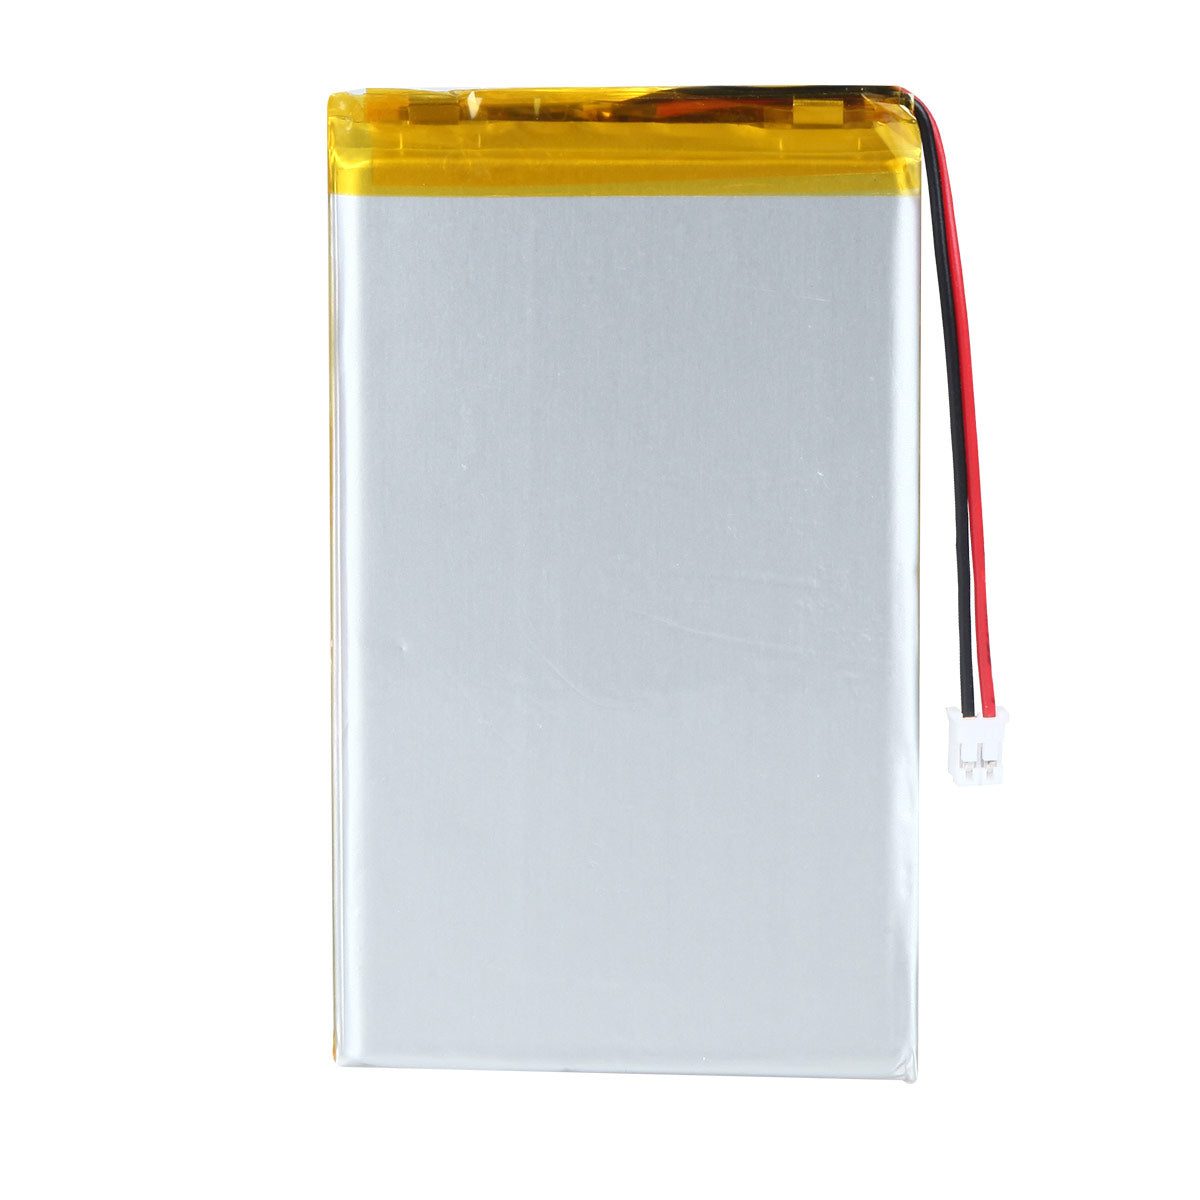 YDL 6060100 Batterie lithium-polymère rechargeable 3,7 V 5000 mAh Longueur 102 mm